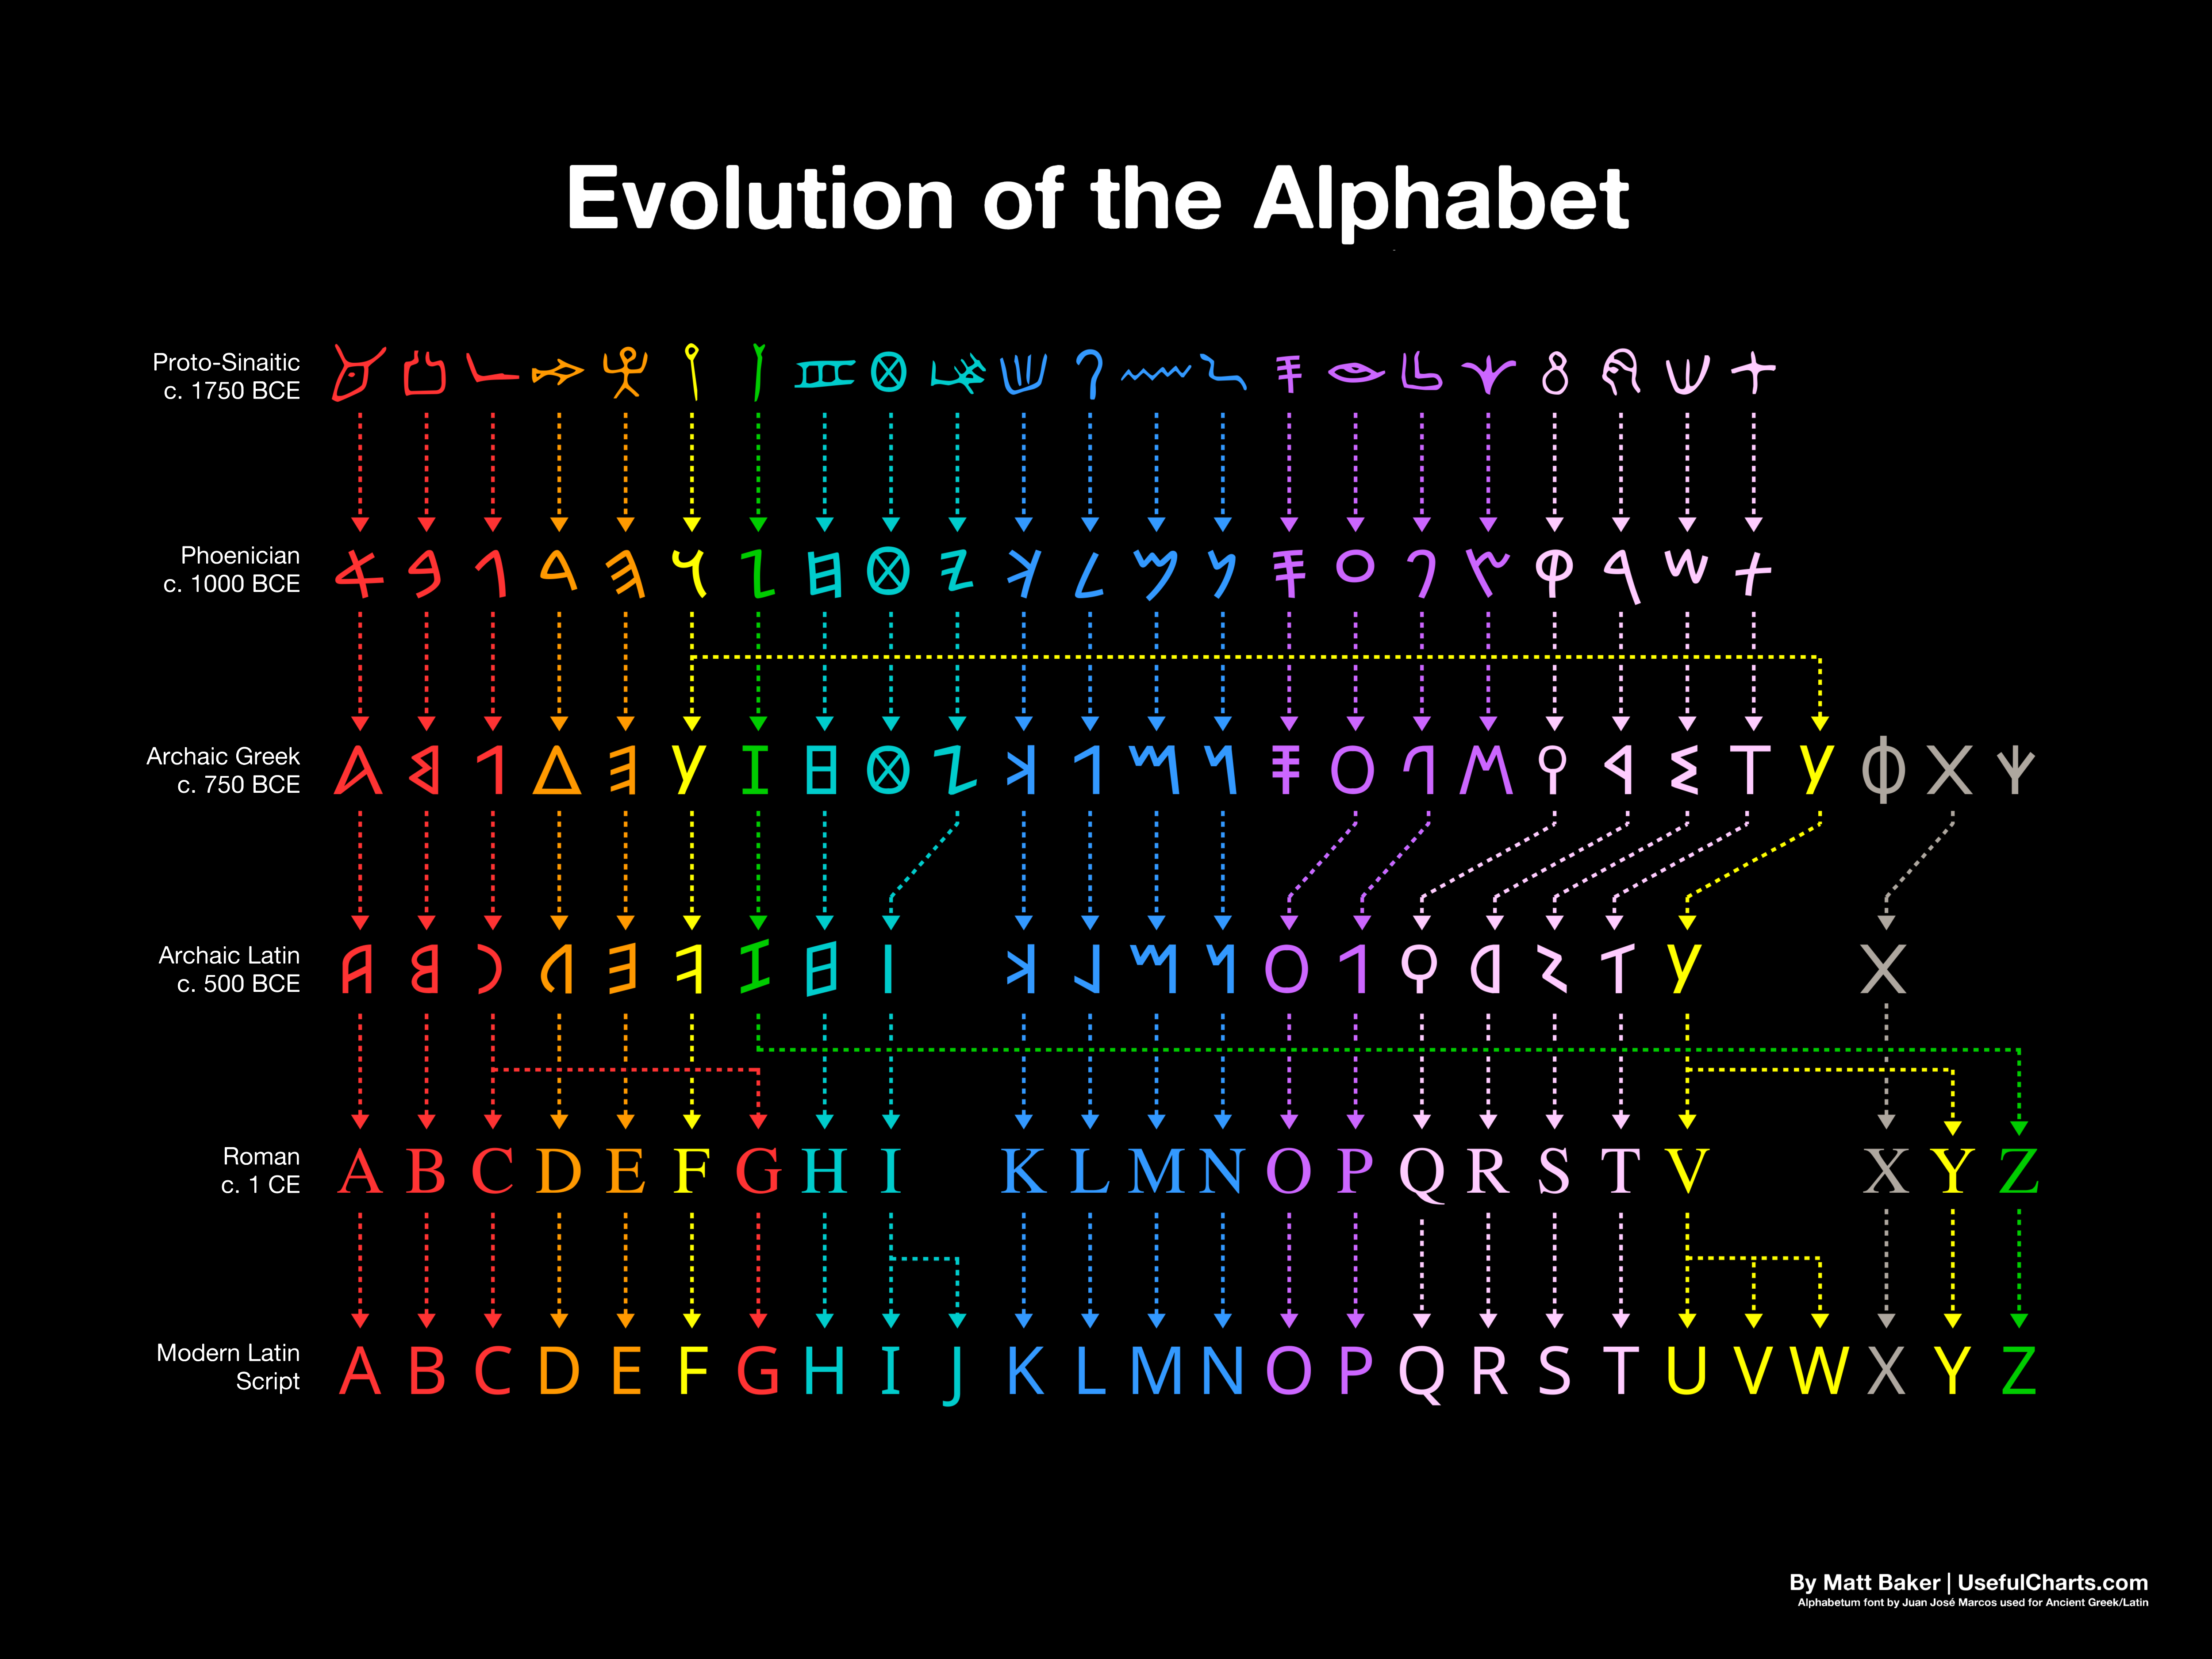 Hebrew Script Letter Chart